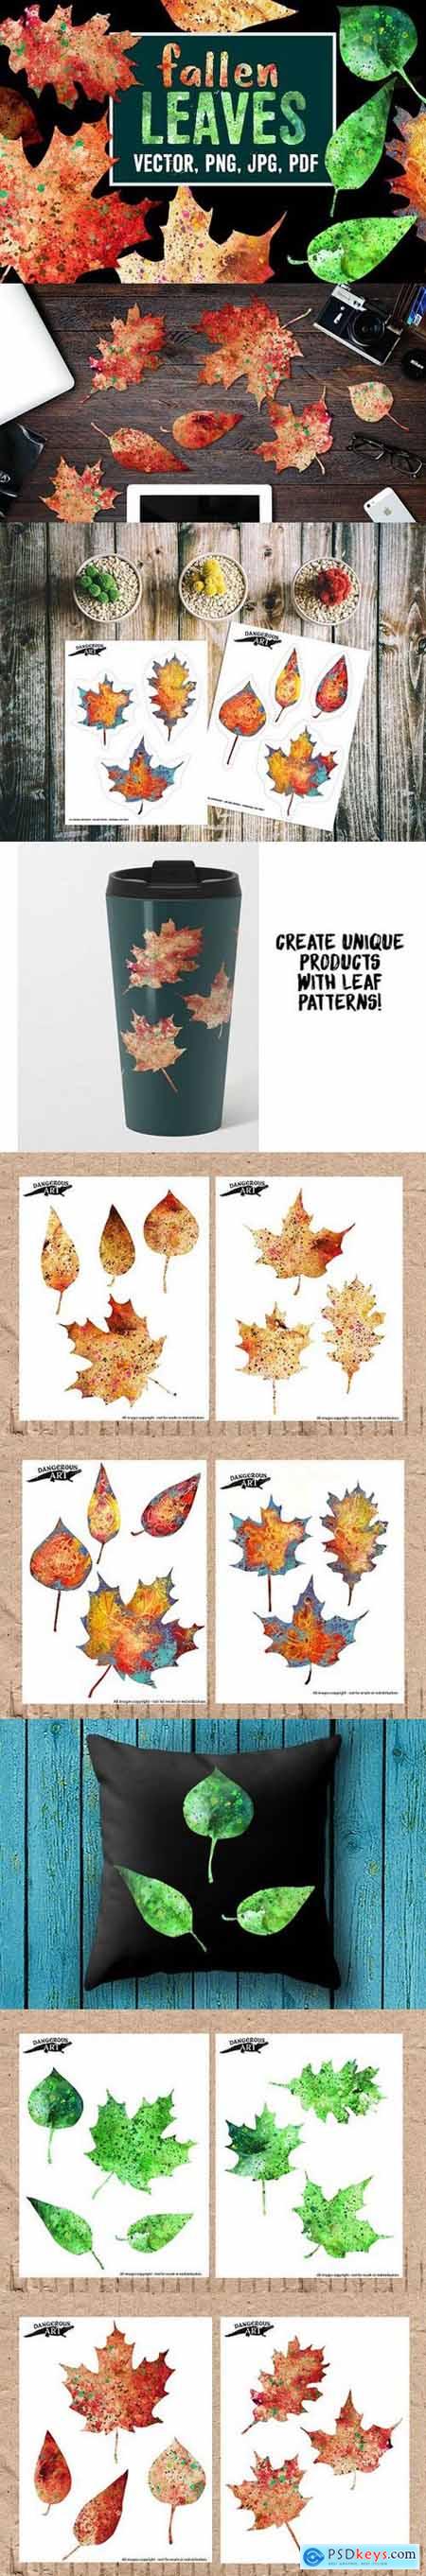 Fallen Leaves - 28 Colorful Elements 1213670